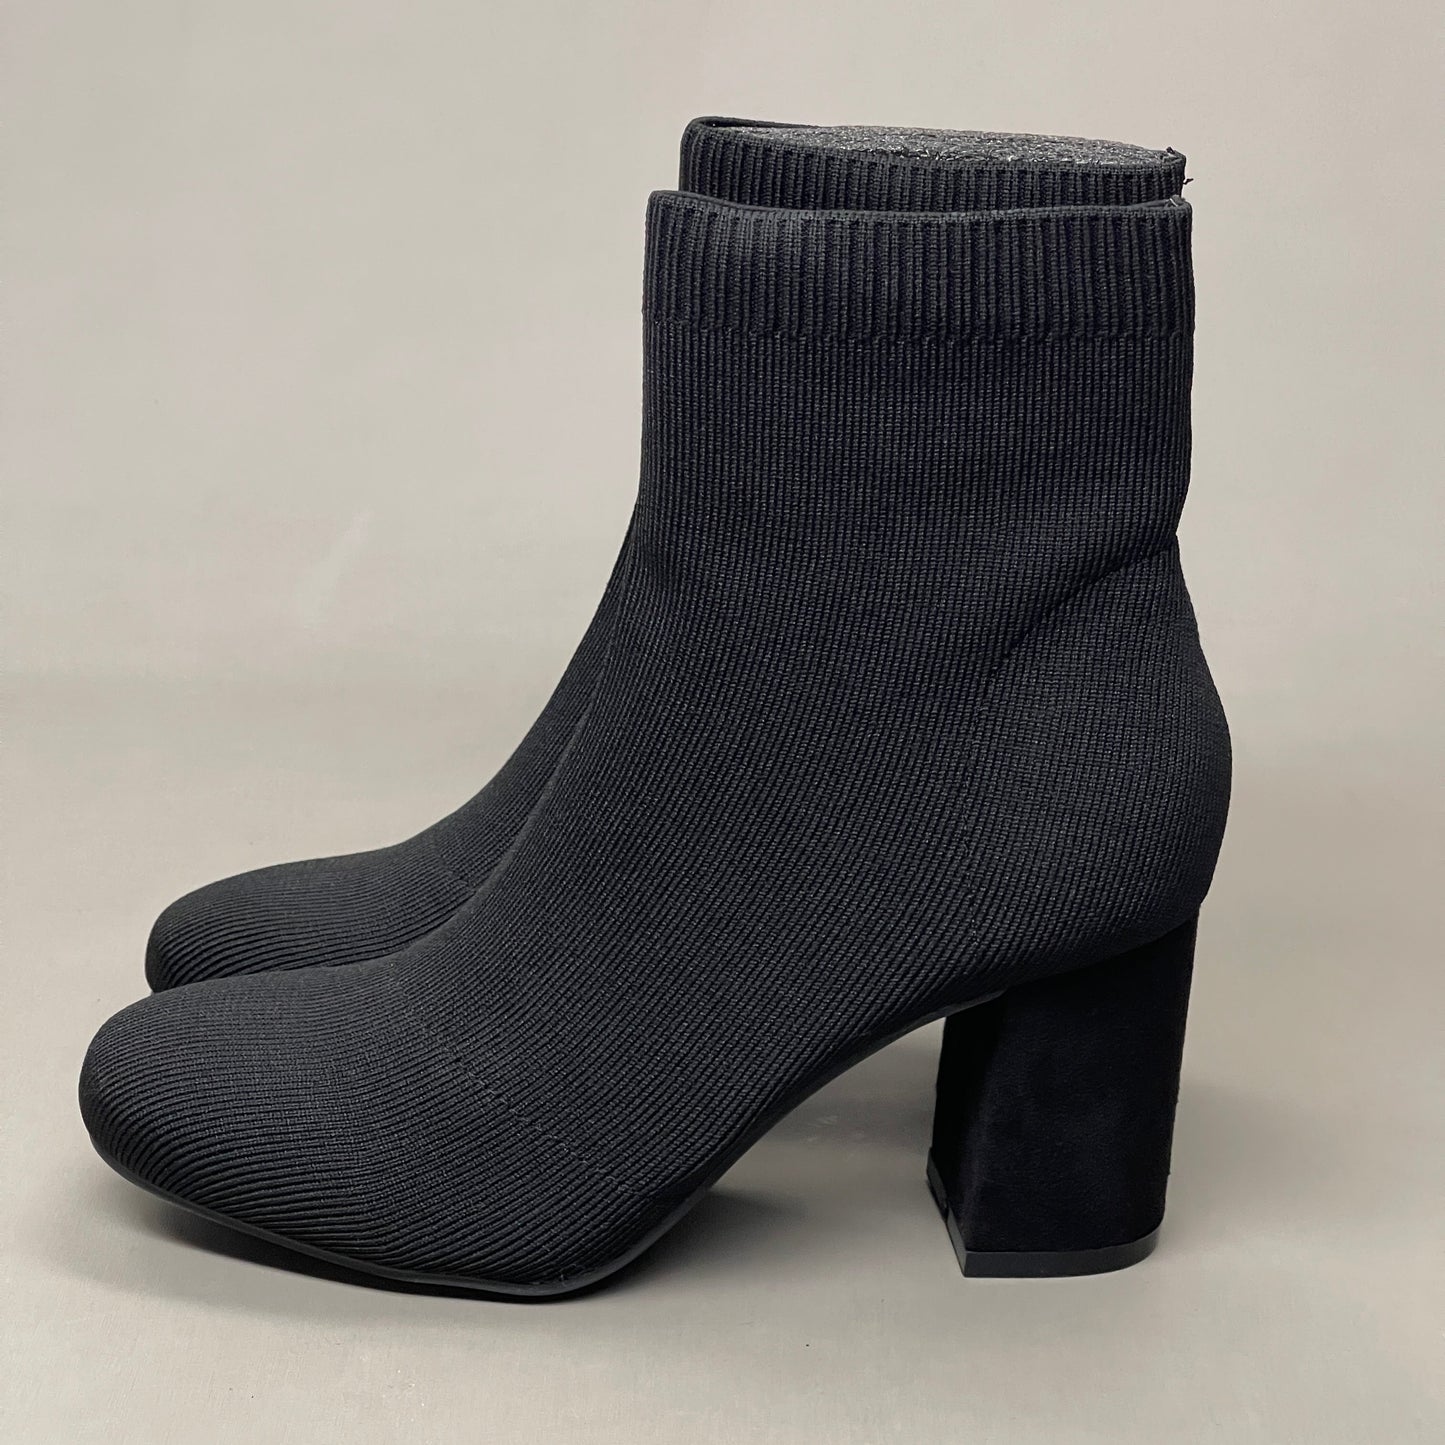 MIA Erika Fly Knit Booties Dress Boots Black 2” Heel Sz 4.5 GS7553115Y (New)